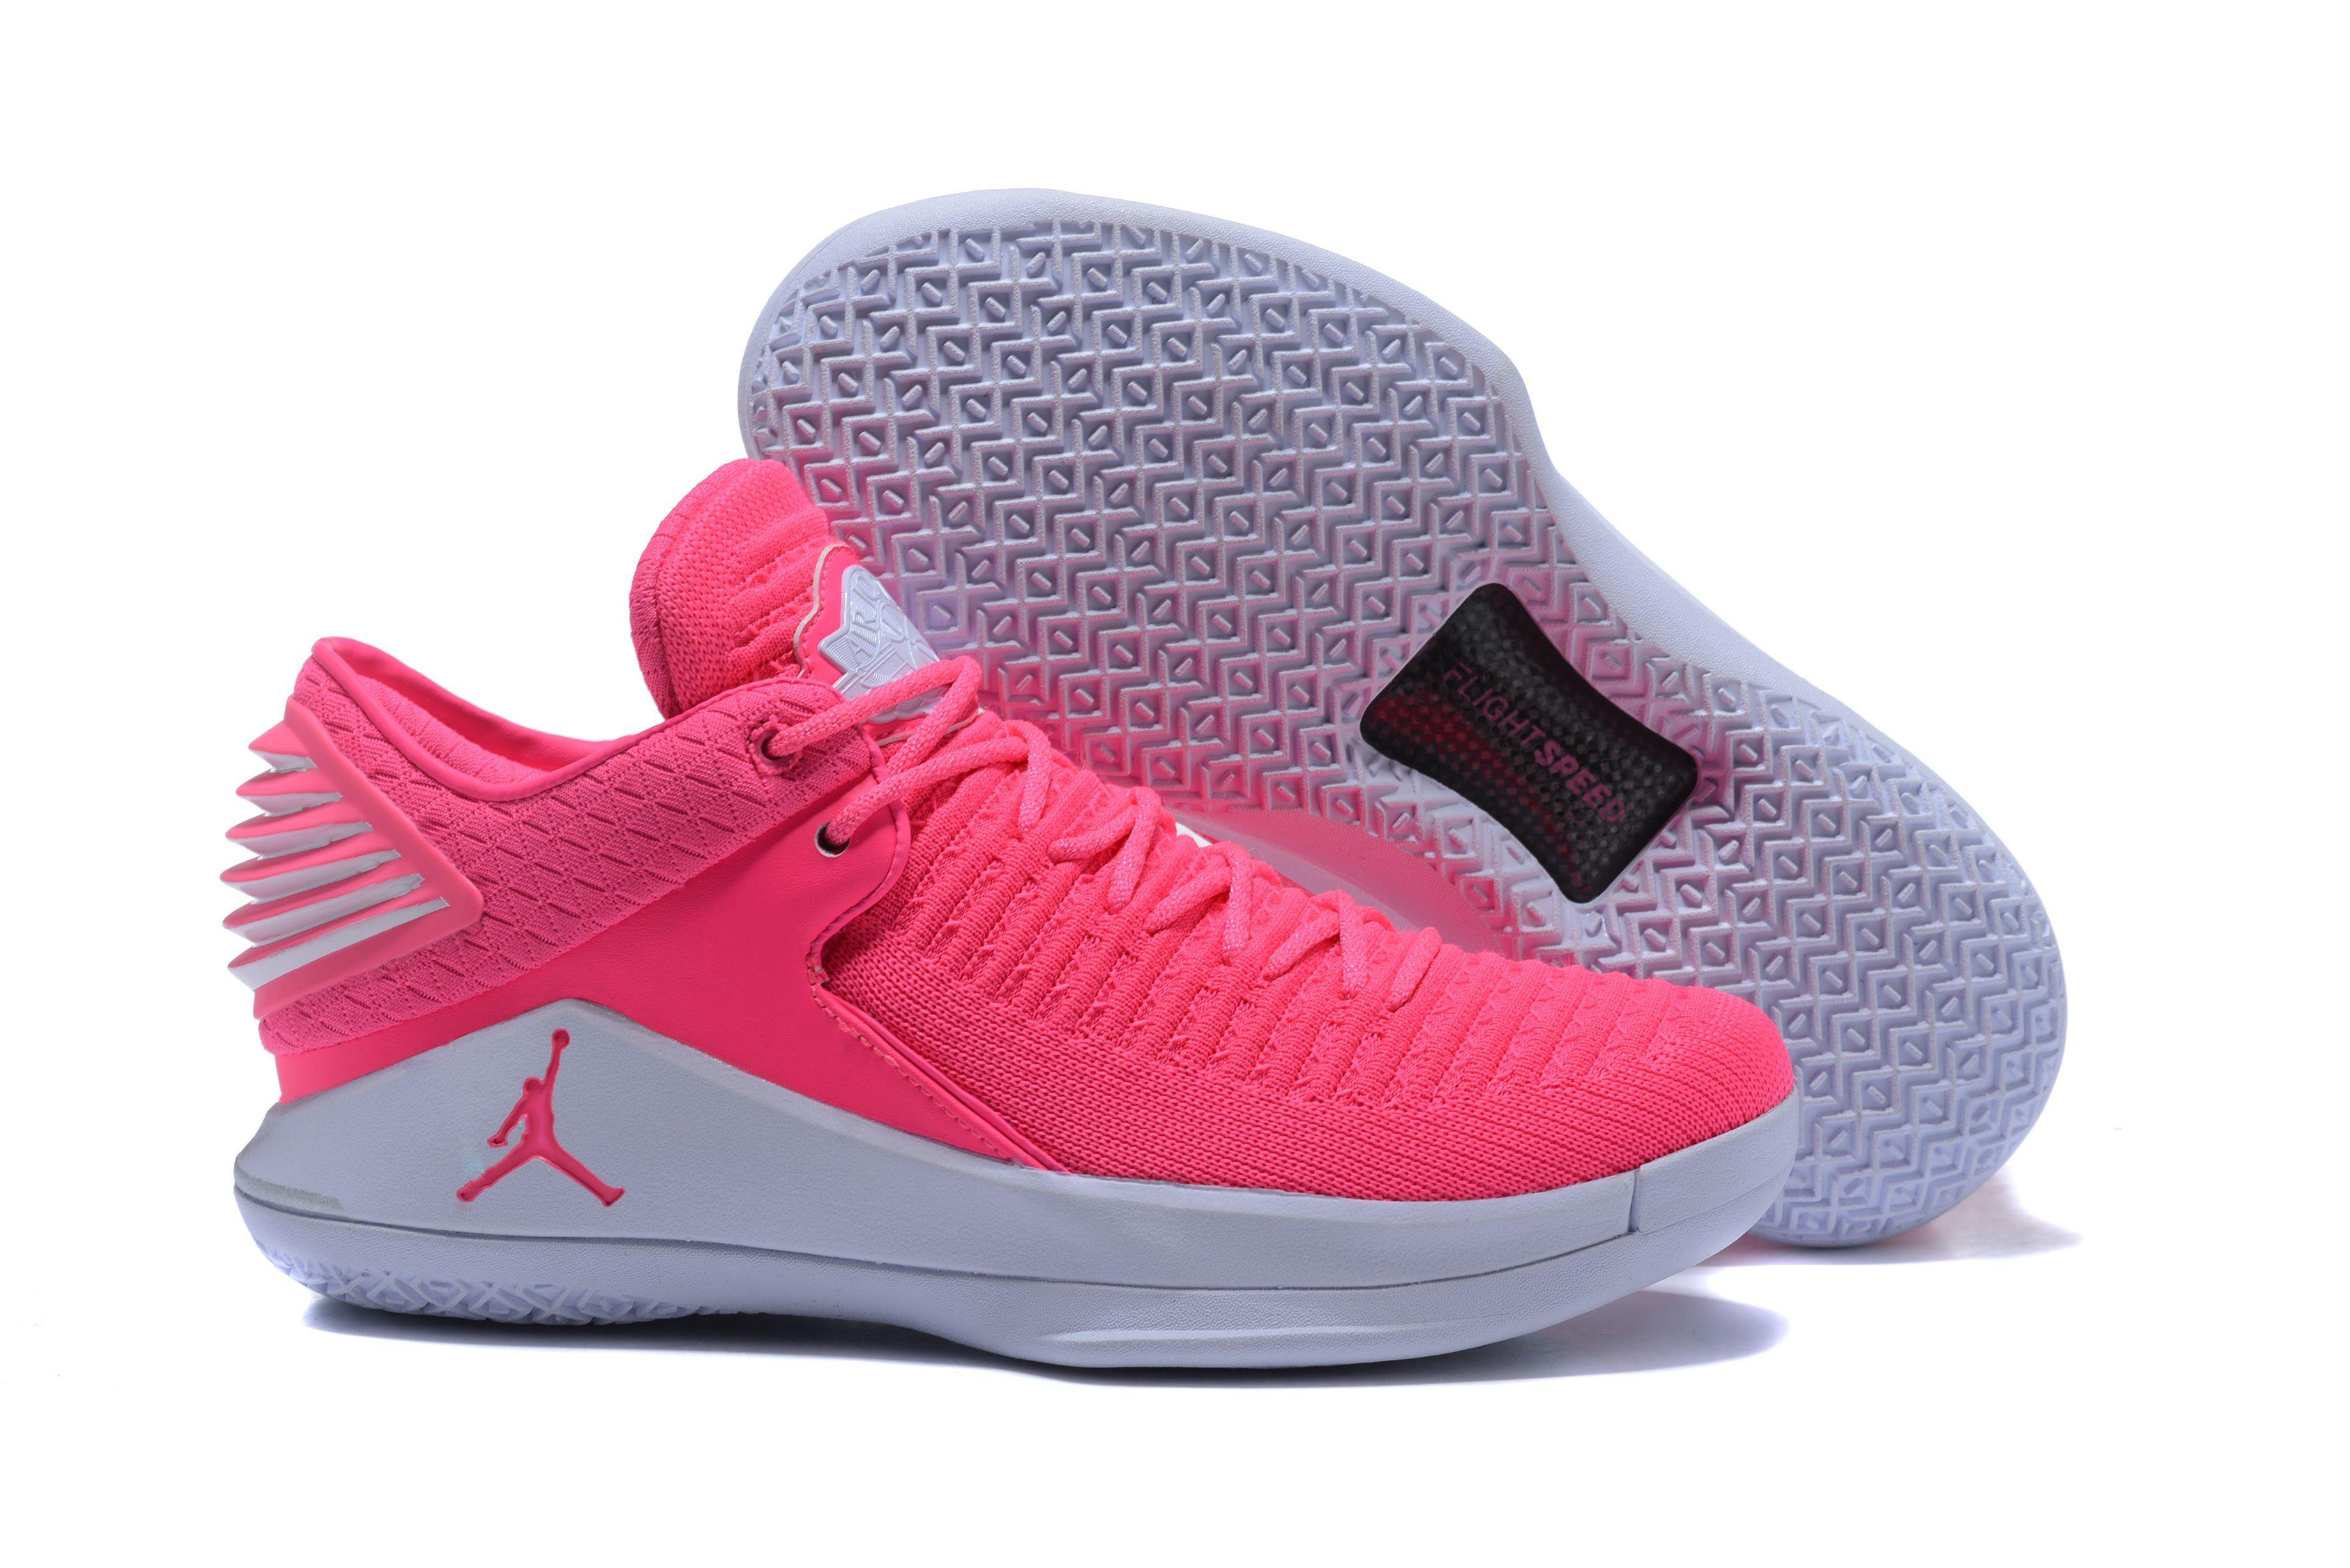 Hot Pink Jordan Logo - 2018 Jimmy Butler Air Jordan 32 Low “Hot Pink” Cheap | Jordans ...